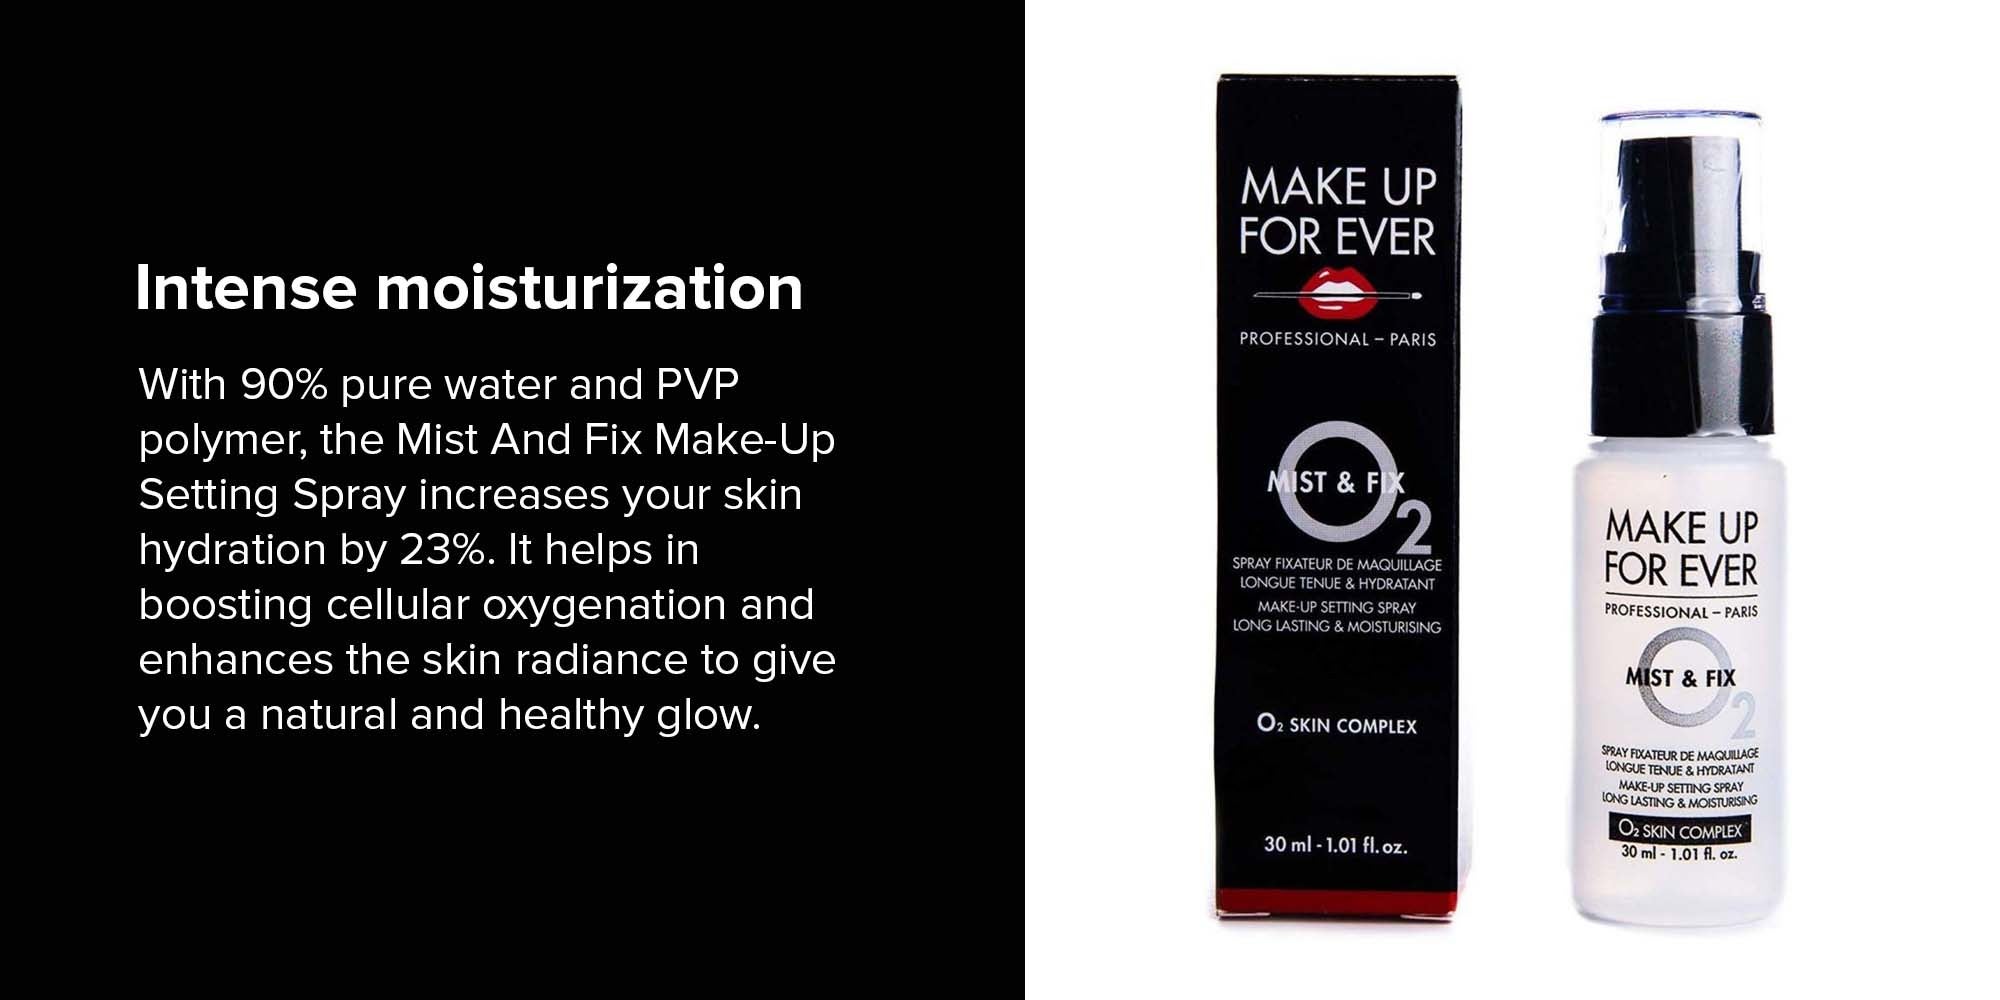 Make Up For Ever Mist & Fix - Makeup Setting Spray, 1.01 fl. oz. / 30 ml 